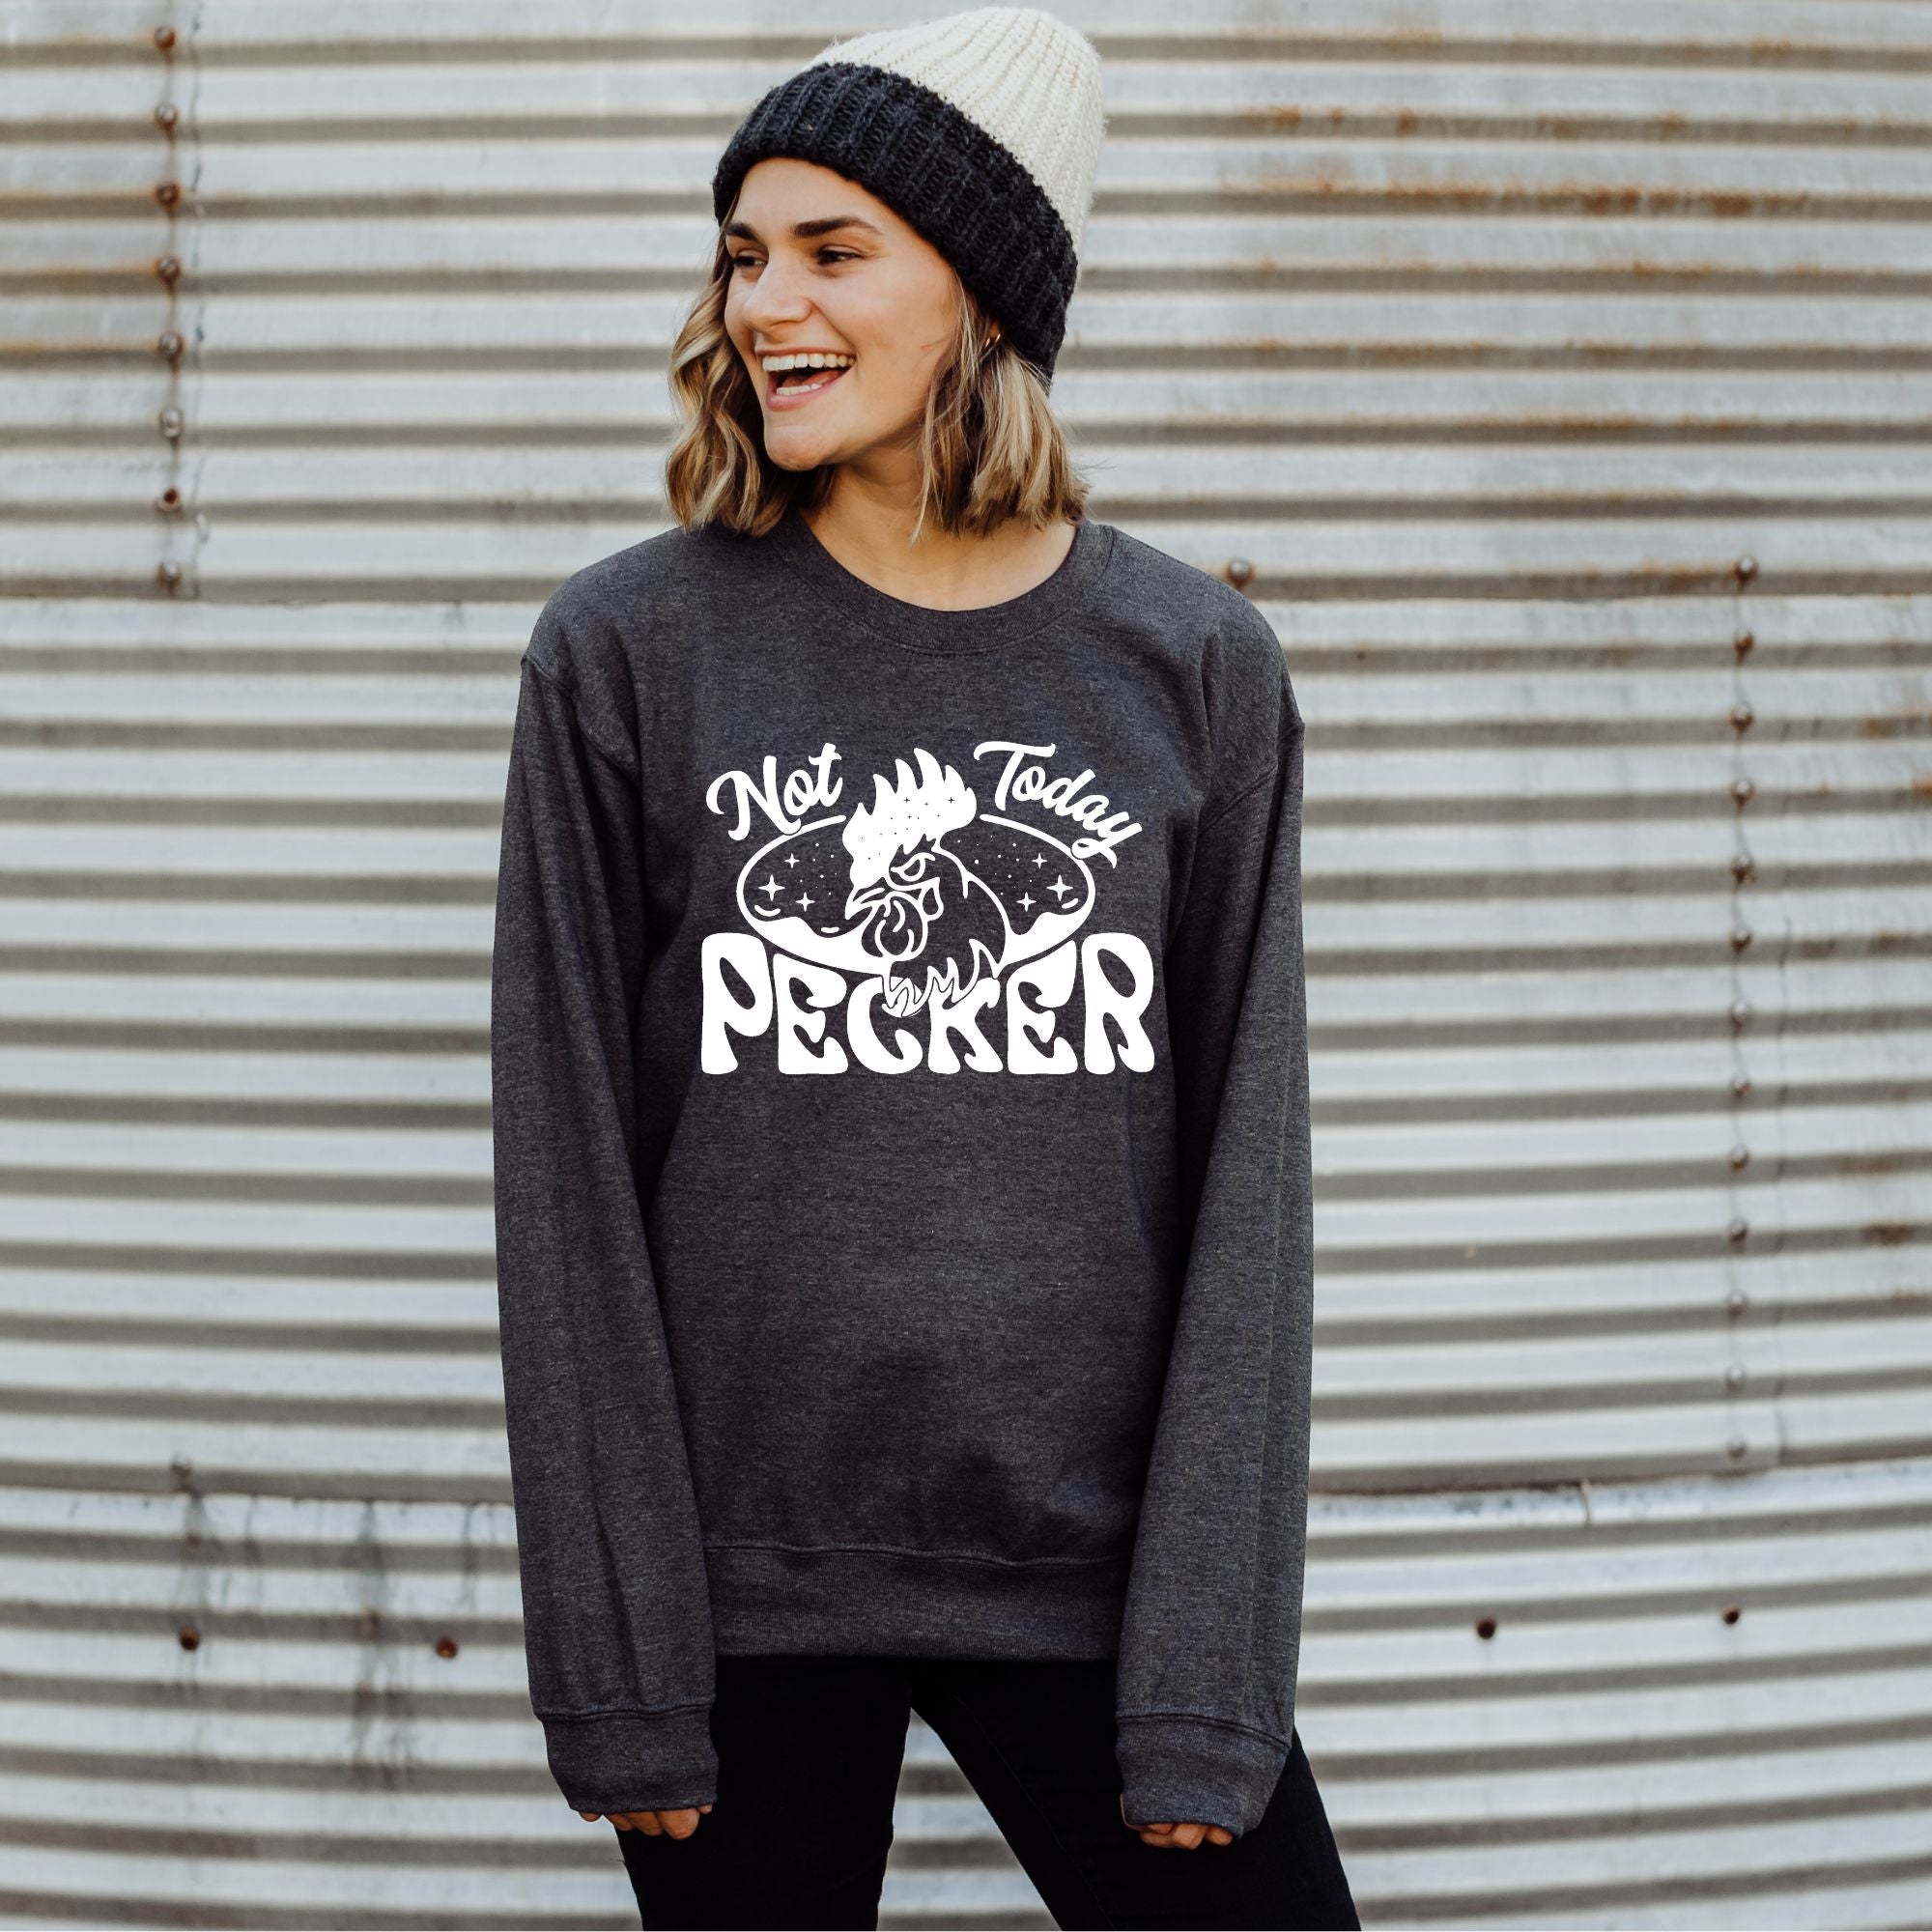 Not Today Pecker Sweatshirt - Hoodie or Crewneck for Nature Lover *UNISEX FIT*-Sweatshirts-208 Tees Wholesale, Idaho